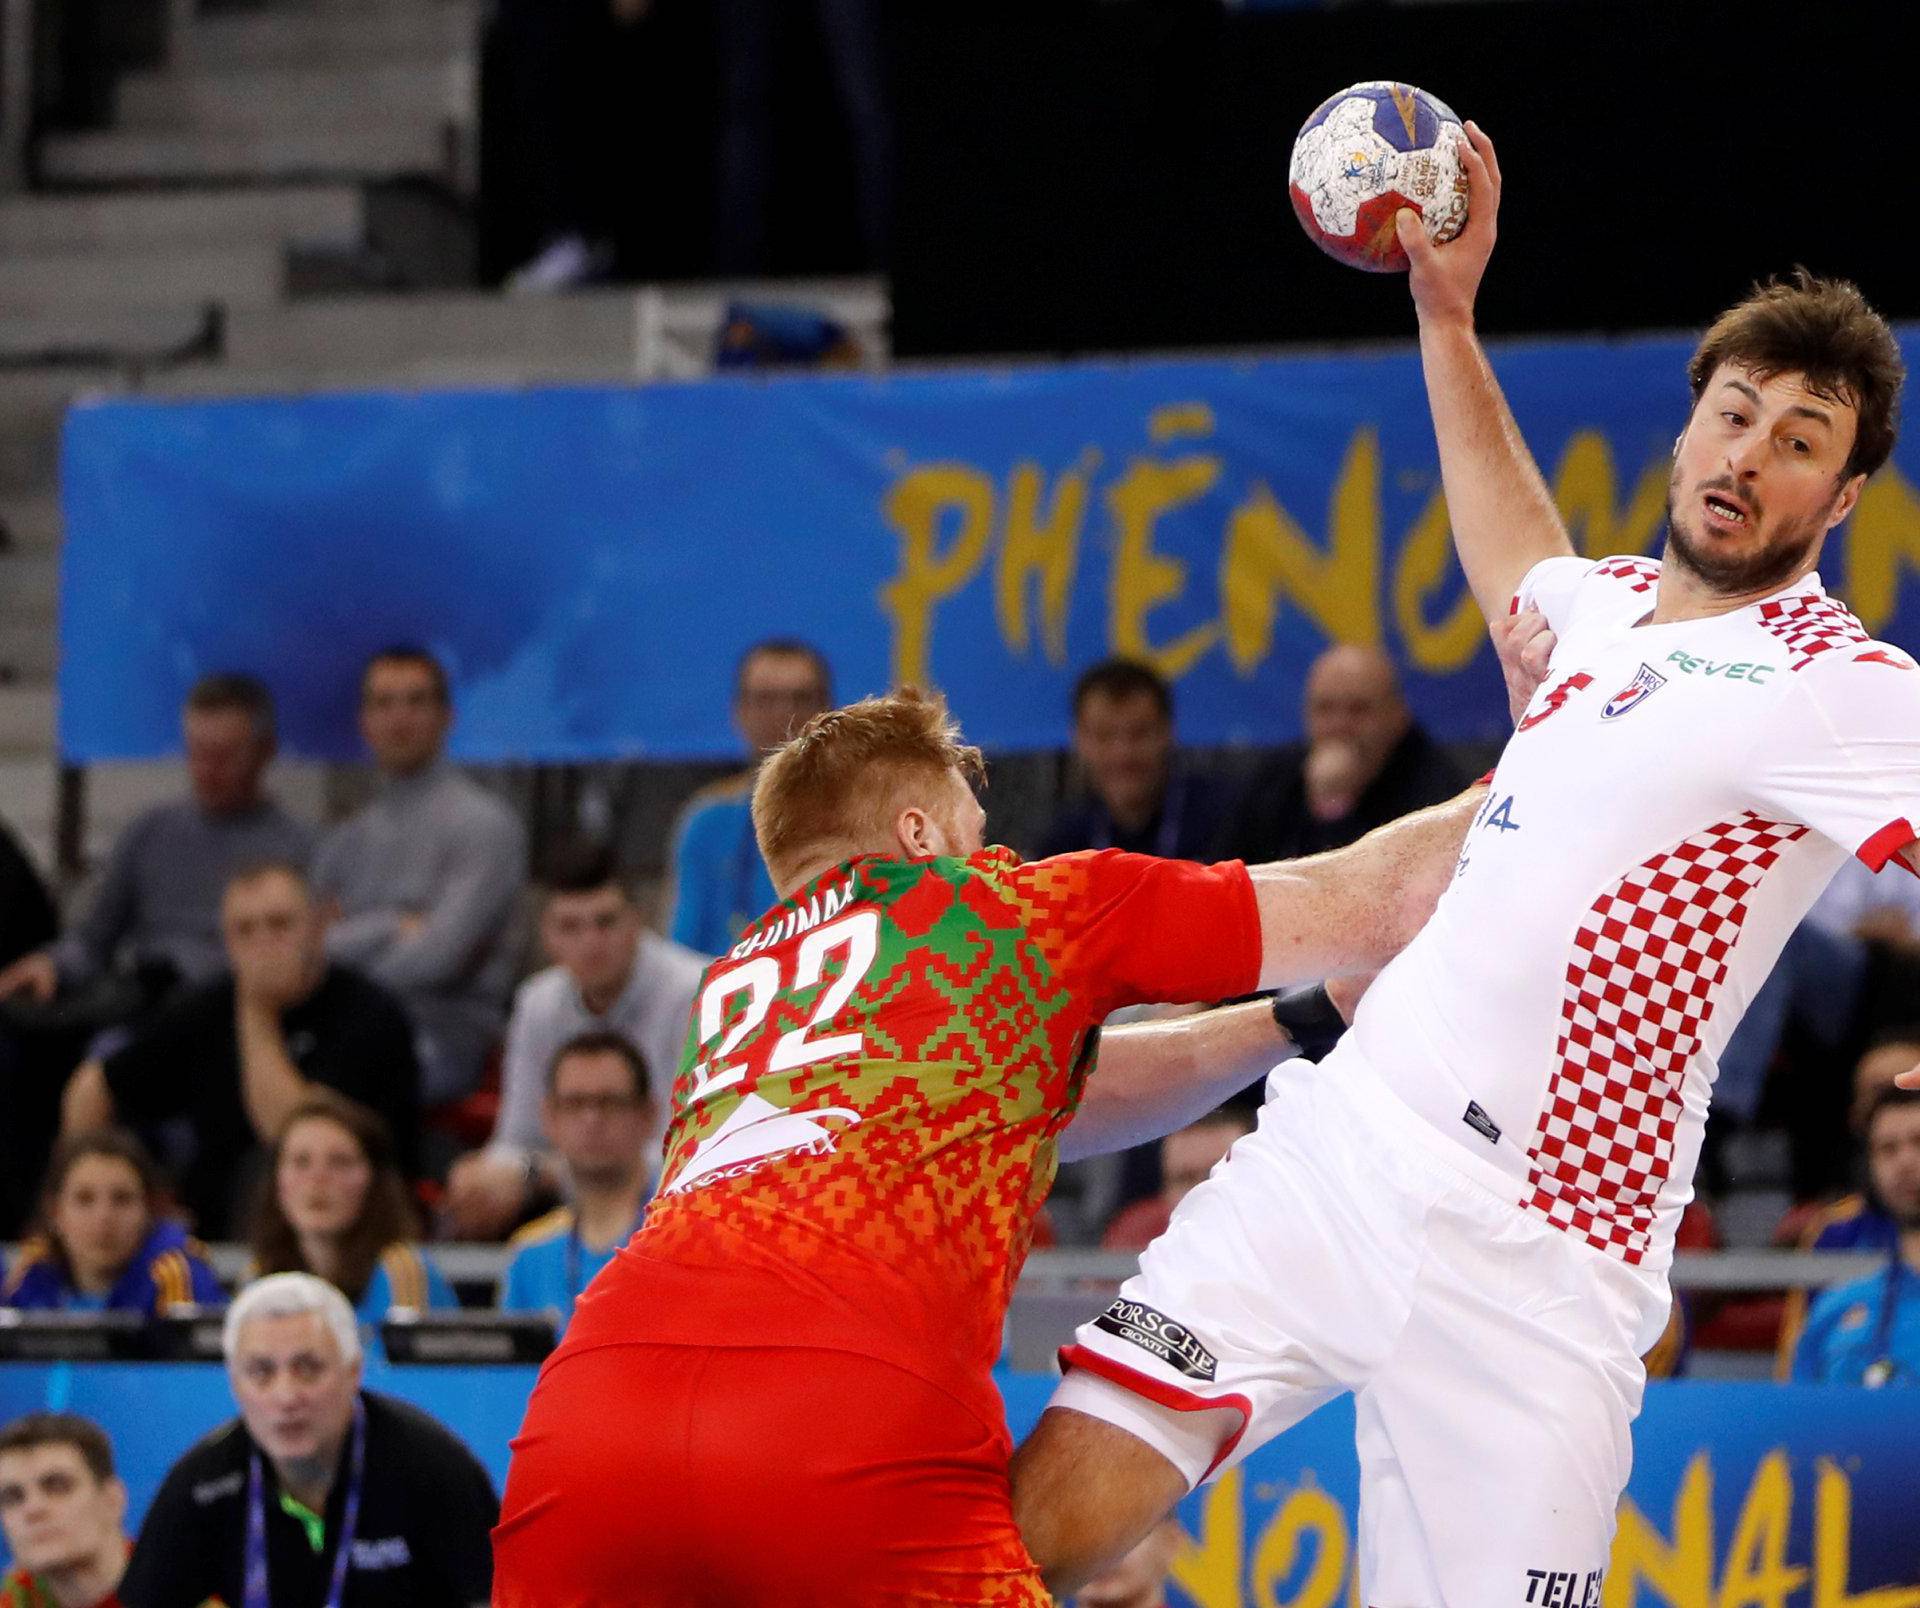 Men's Handball - Croatia v Belarus - 2017 Men's World Championship Main Round - Group C